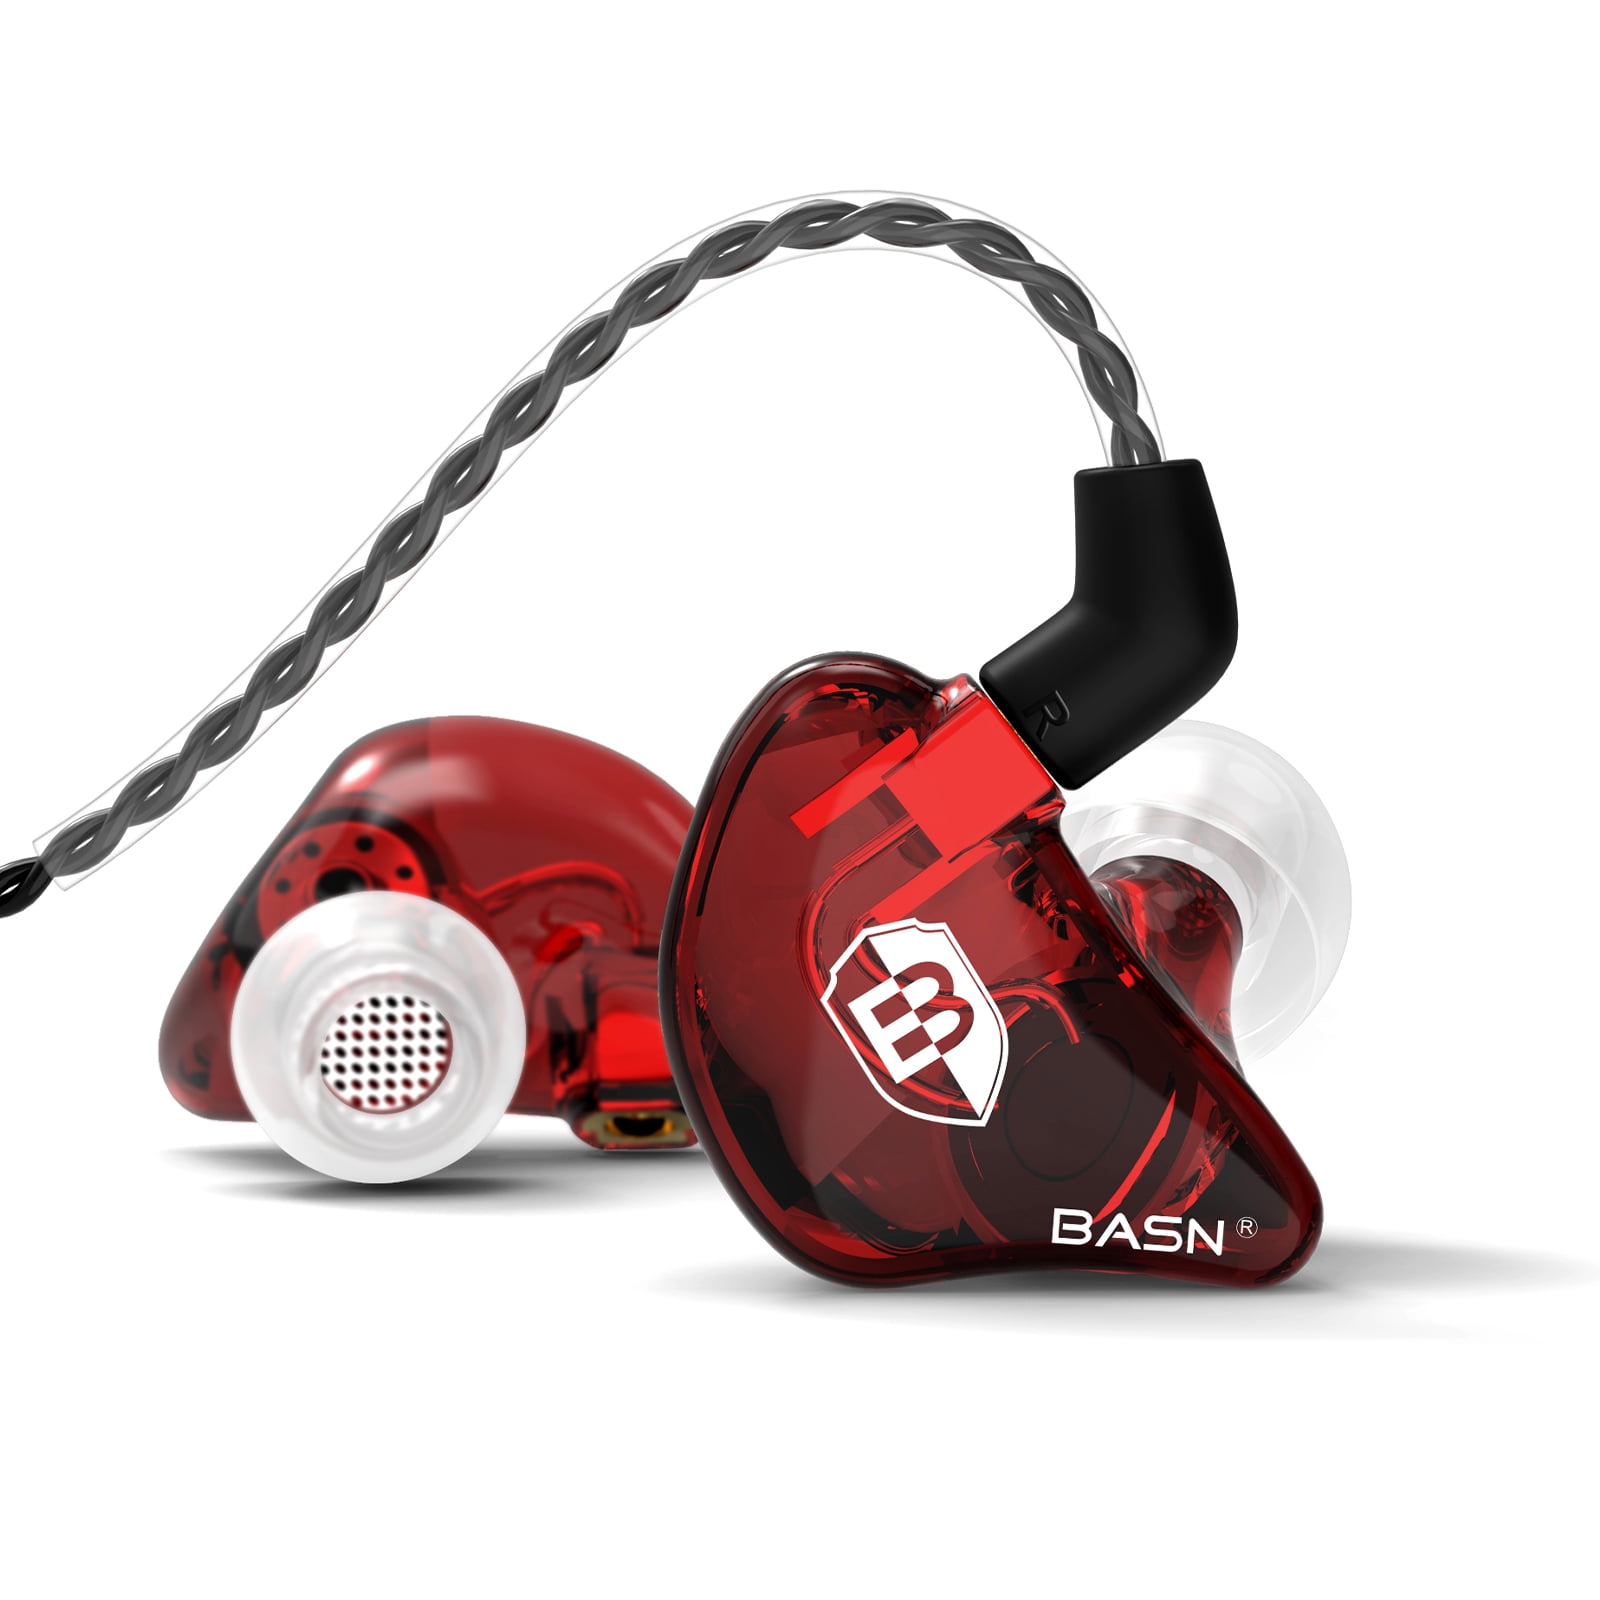 Lab-Flex In-Ear Music Monitors & Headsets: LabFlex In Ear Monitors from $325